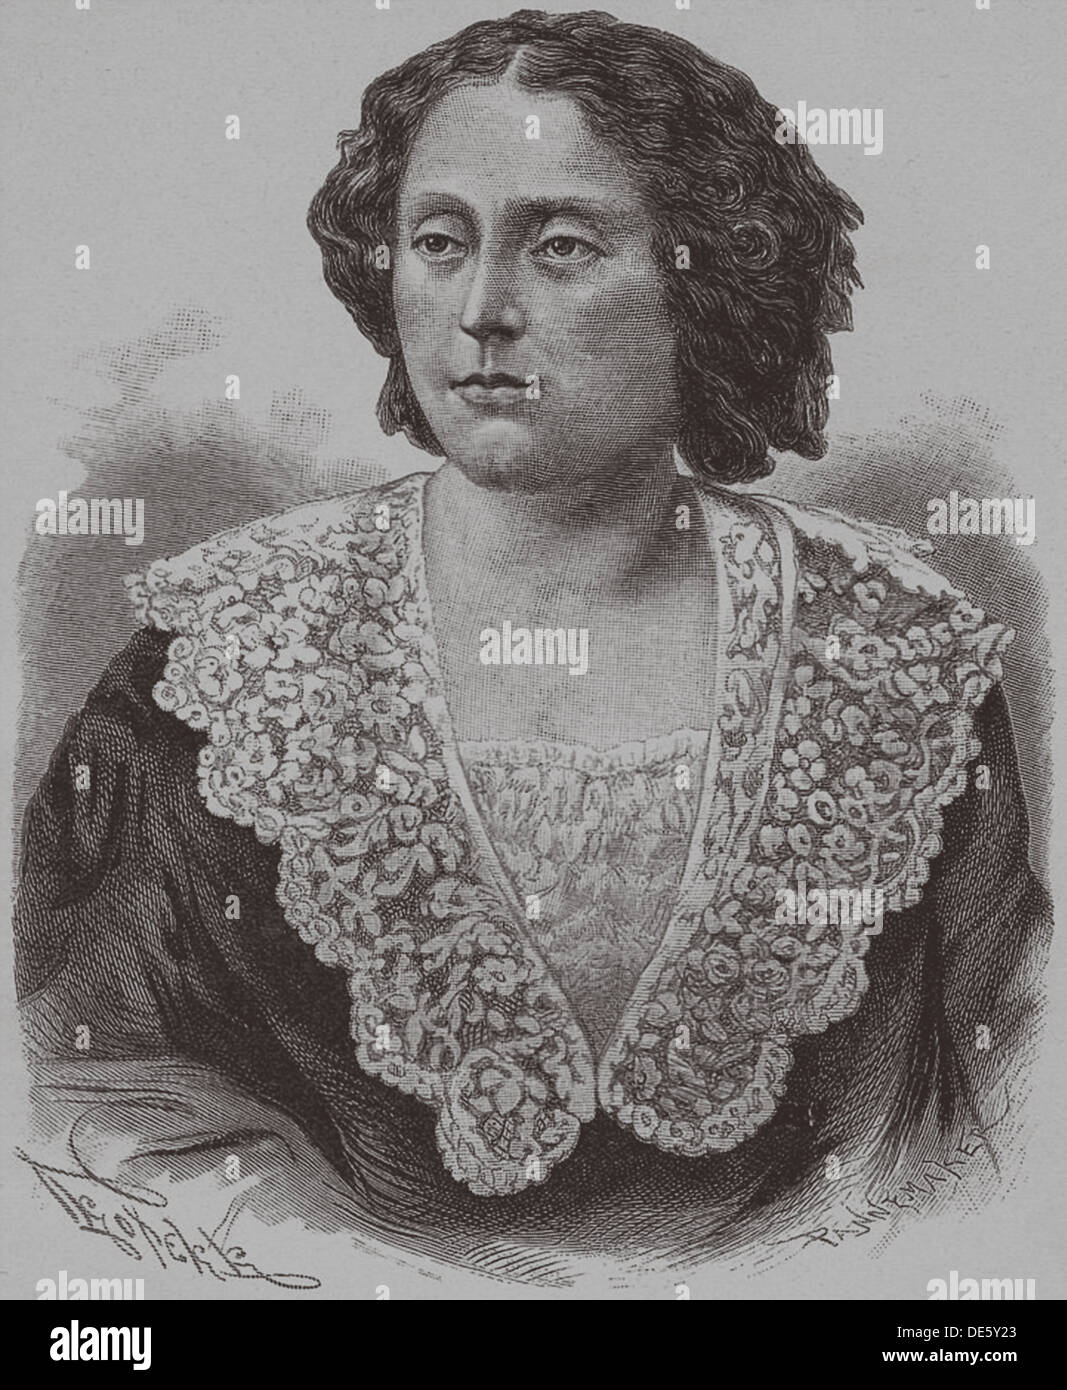 Portrait de Nino Aleksandrovna Bolshoy Pr. Petrogradskoy Storony (née Chavchavadze), 1886. Artiste : Pannemaker, François (1822-1900) Banque D'Images